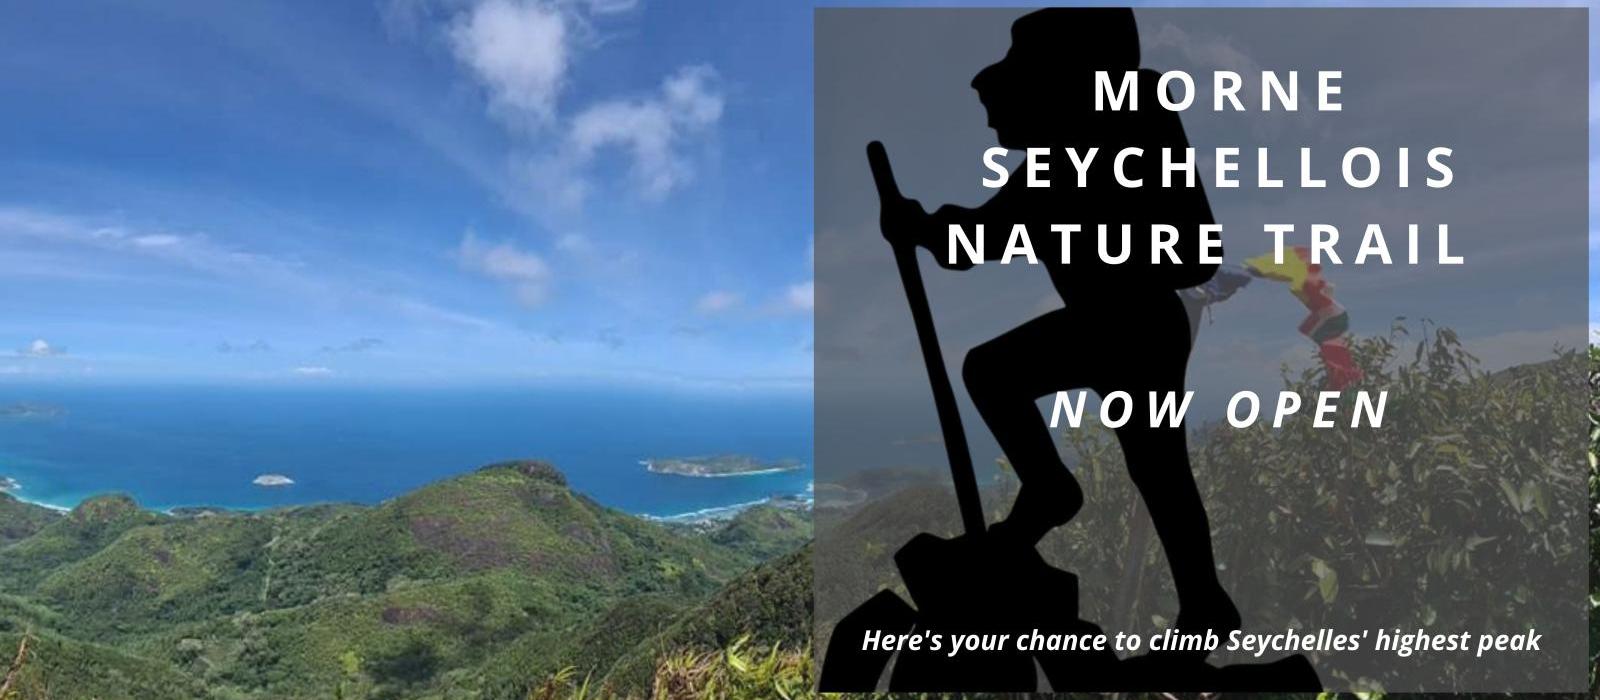 Morne Seychellois Nature Trail Now Open